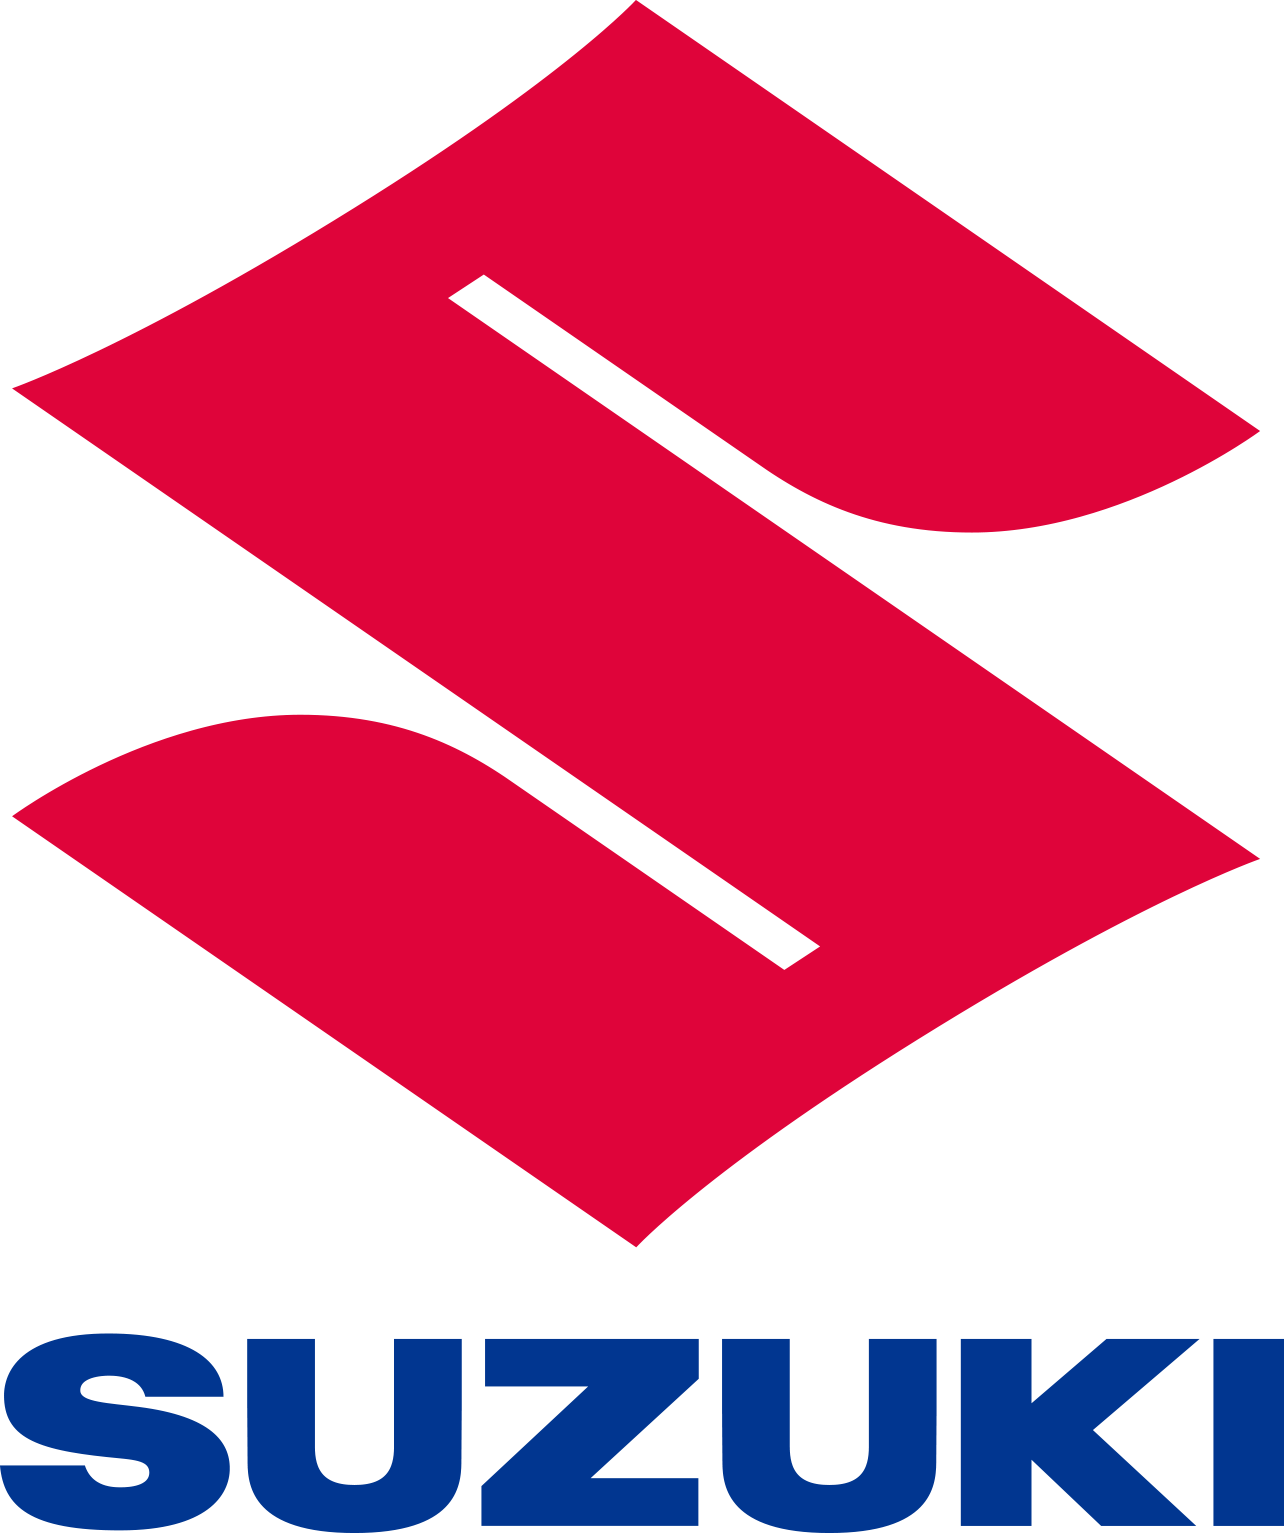 Suzuki Vitara tutti i modelli elettrici e ibridi